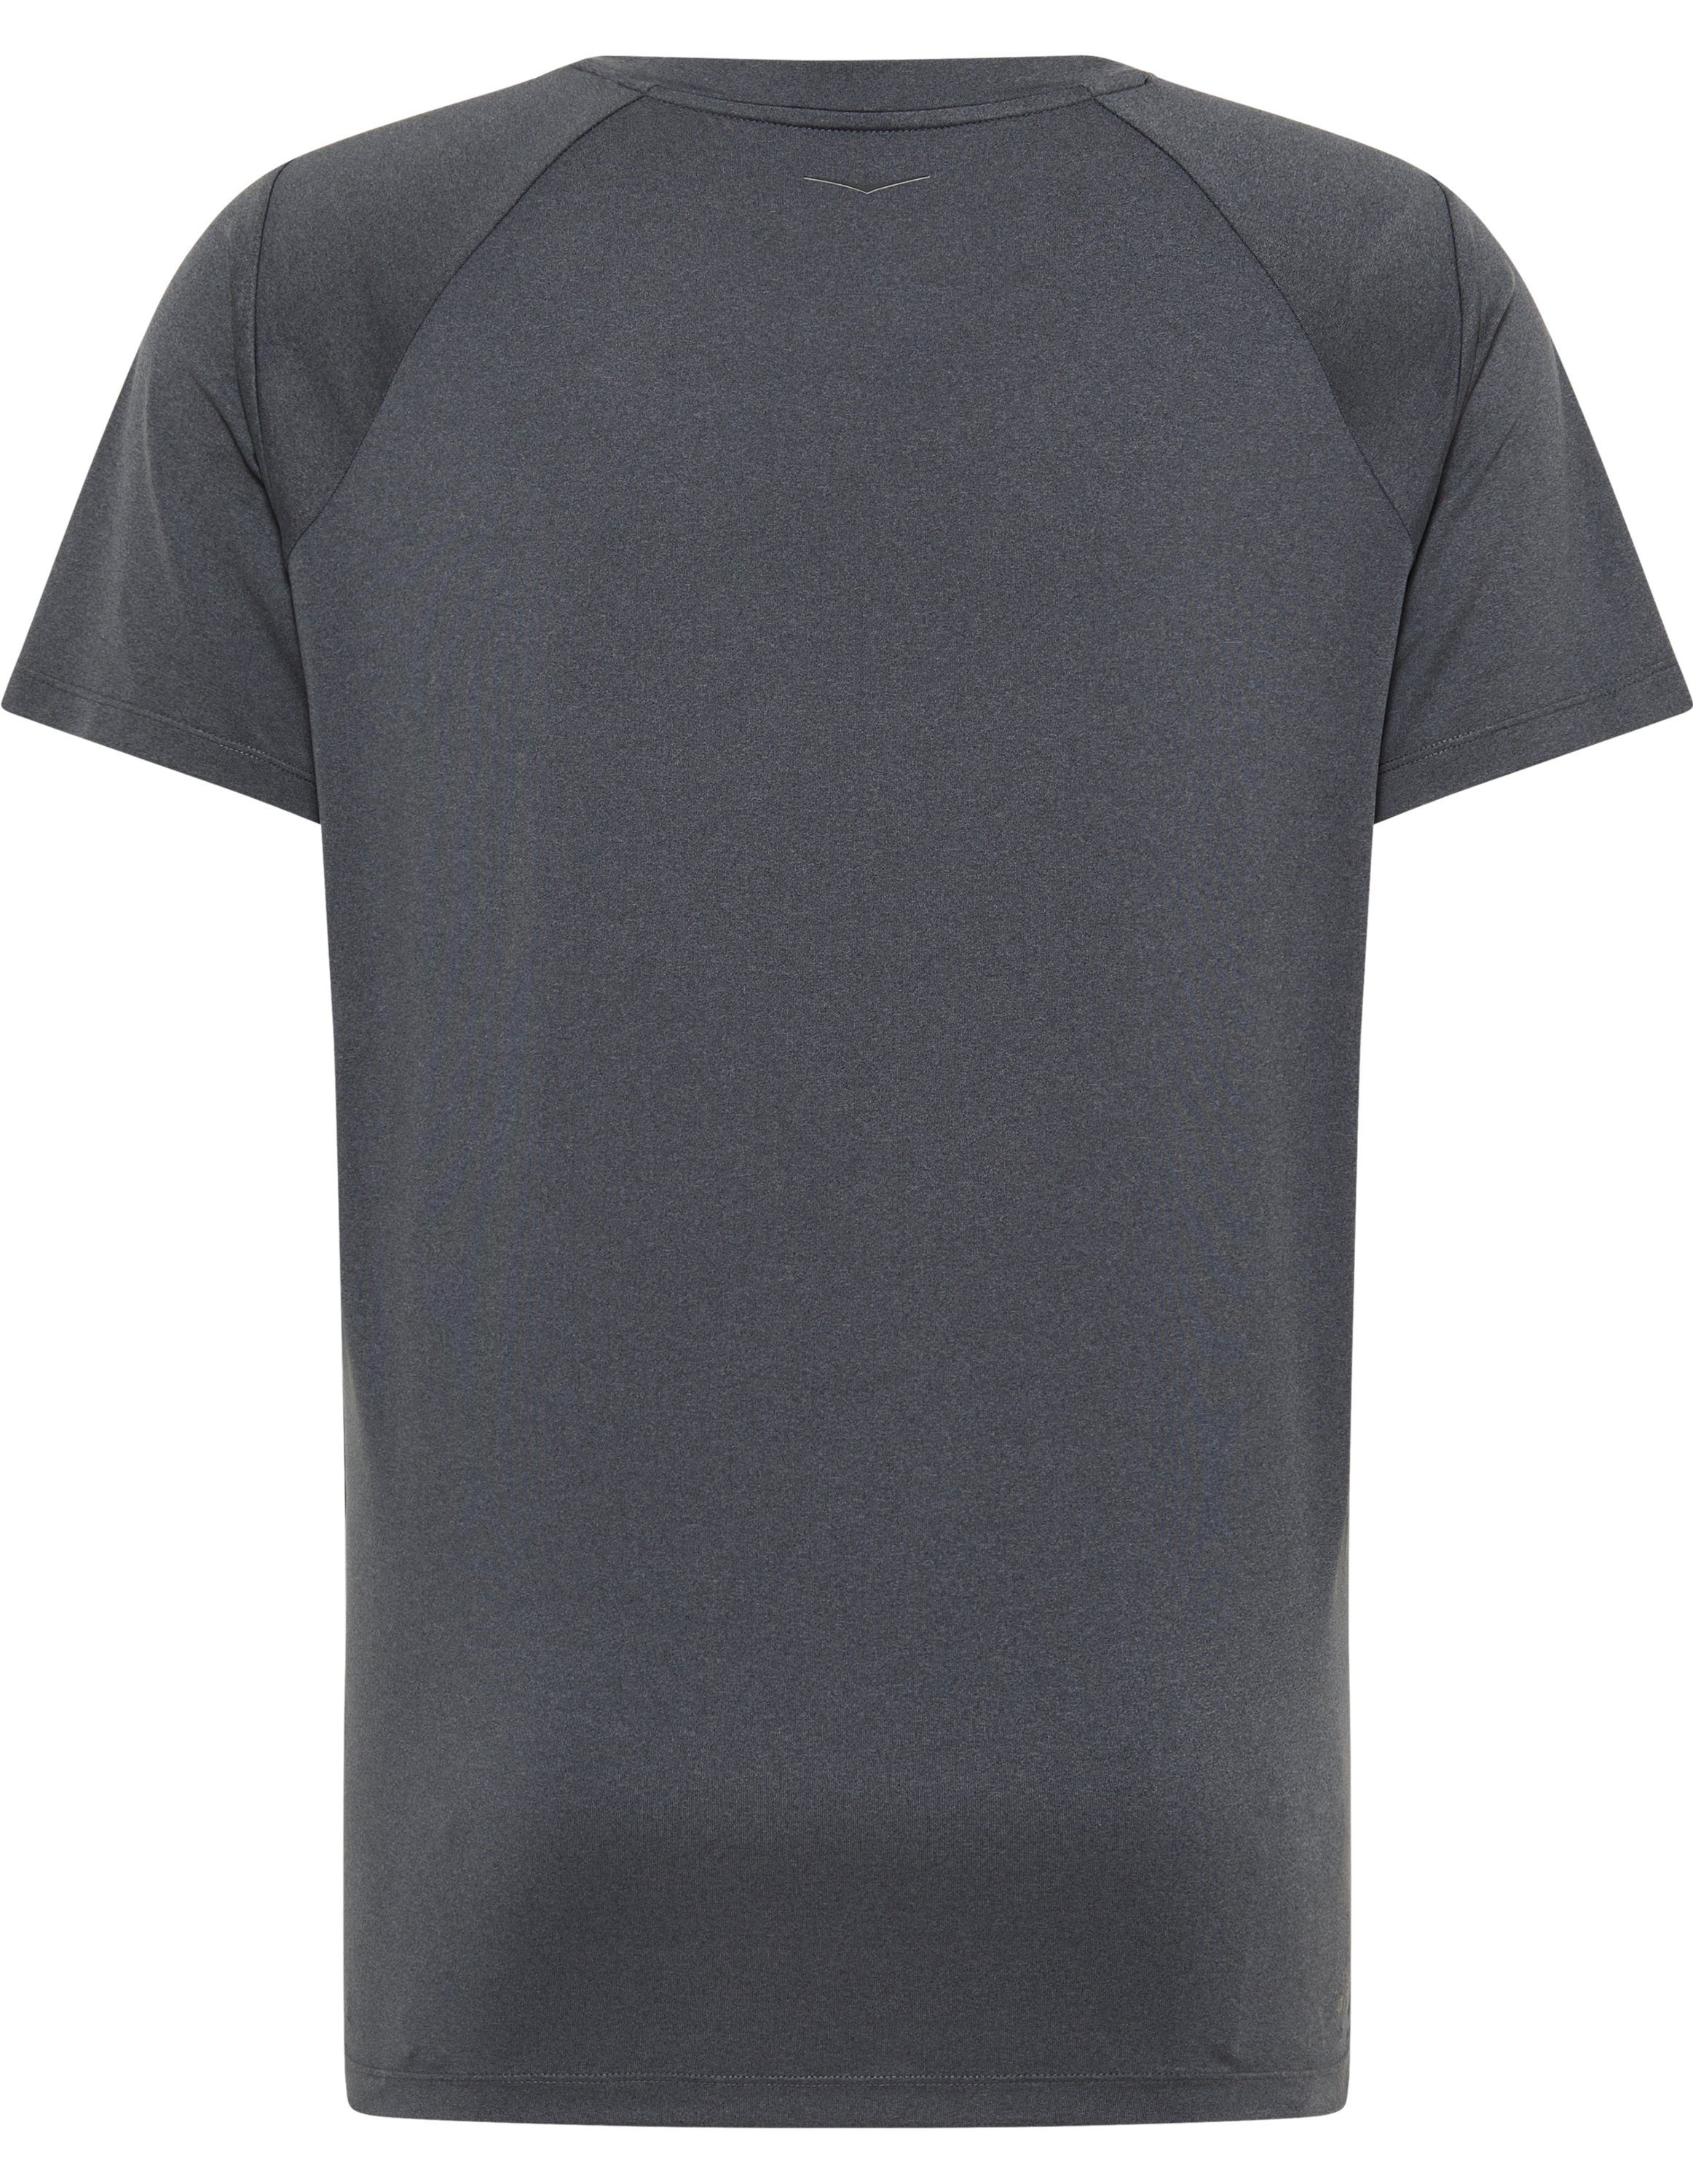 Venice Beach T-Shirt T-Shirt VB carbon melange CLAY grey Men